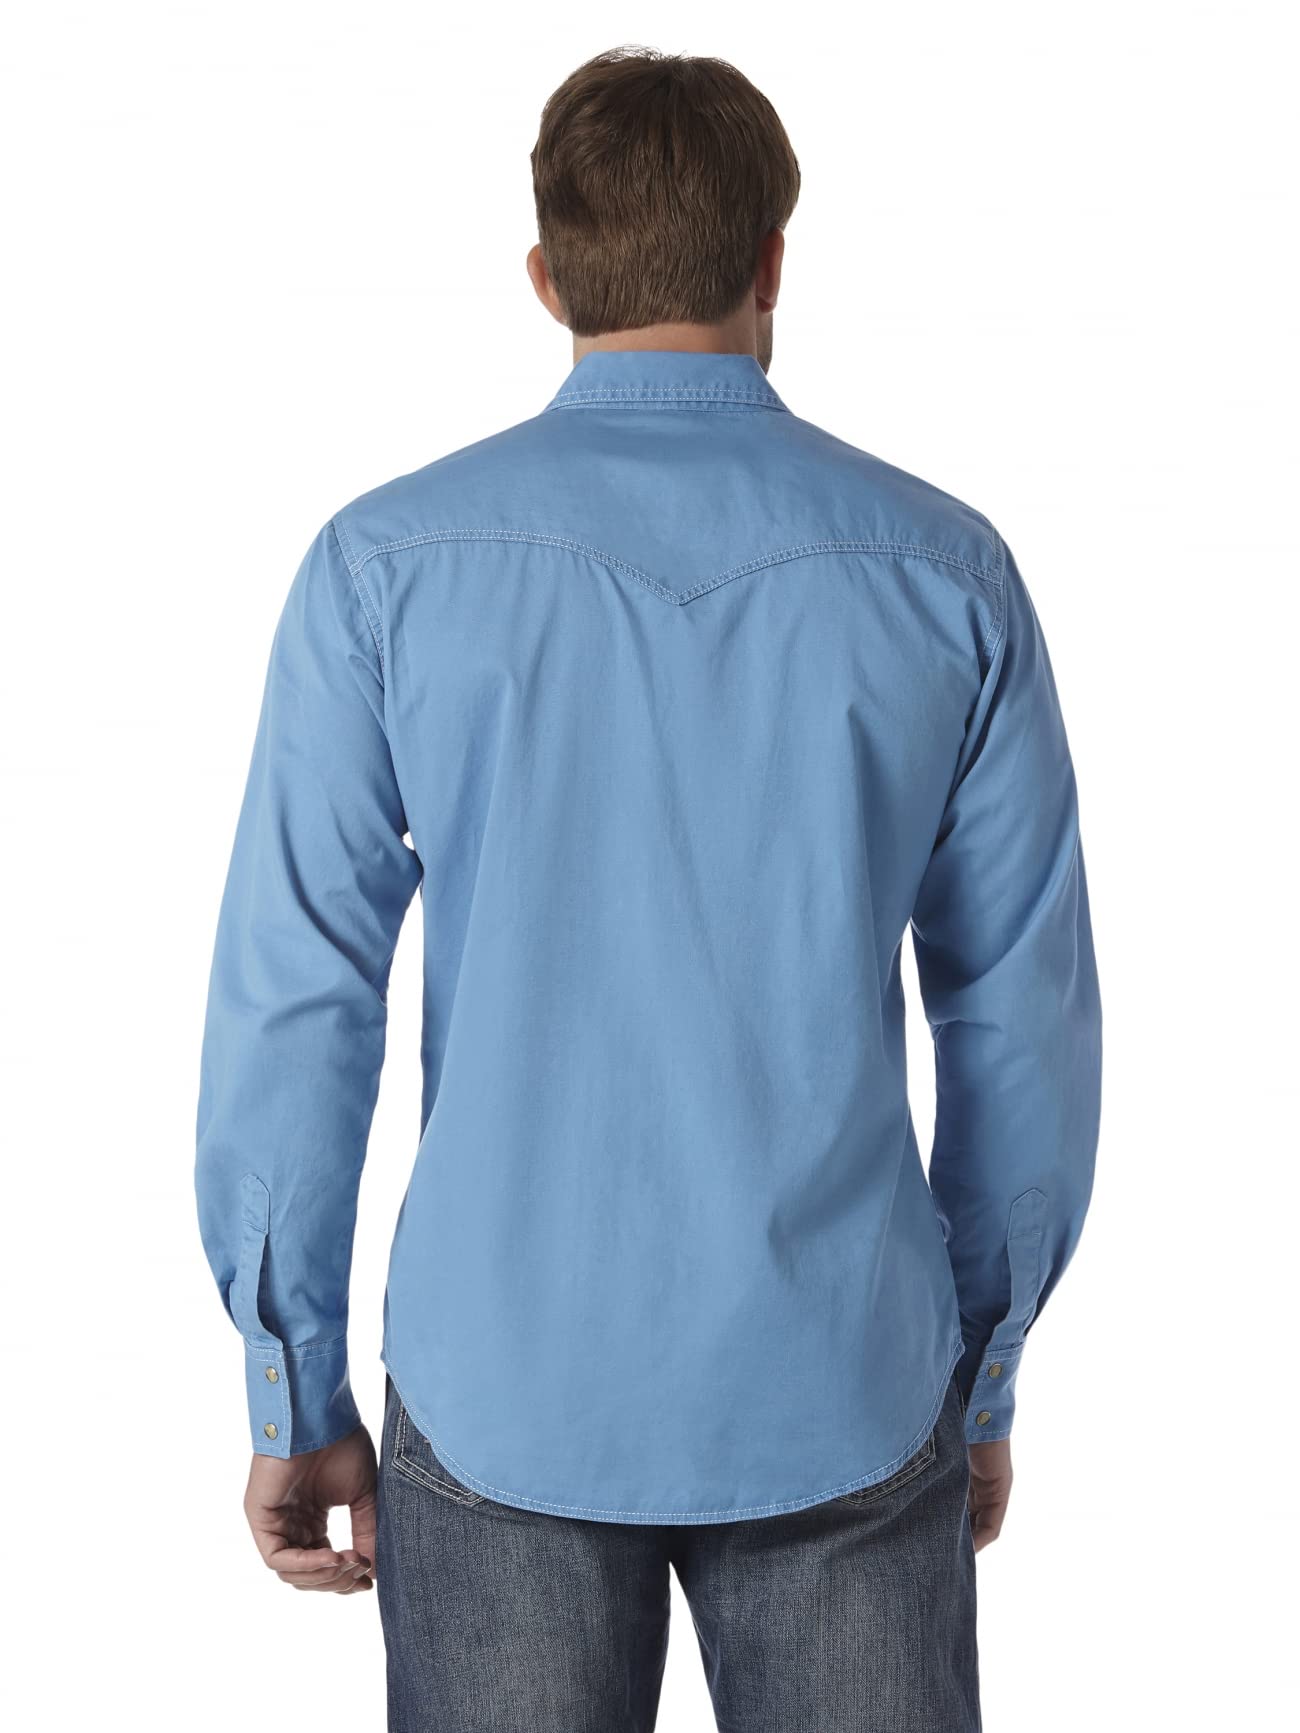 Wrangler Men's Retro Two Pocket Long Sleeve Snap Shirt, Blue, Medium